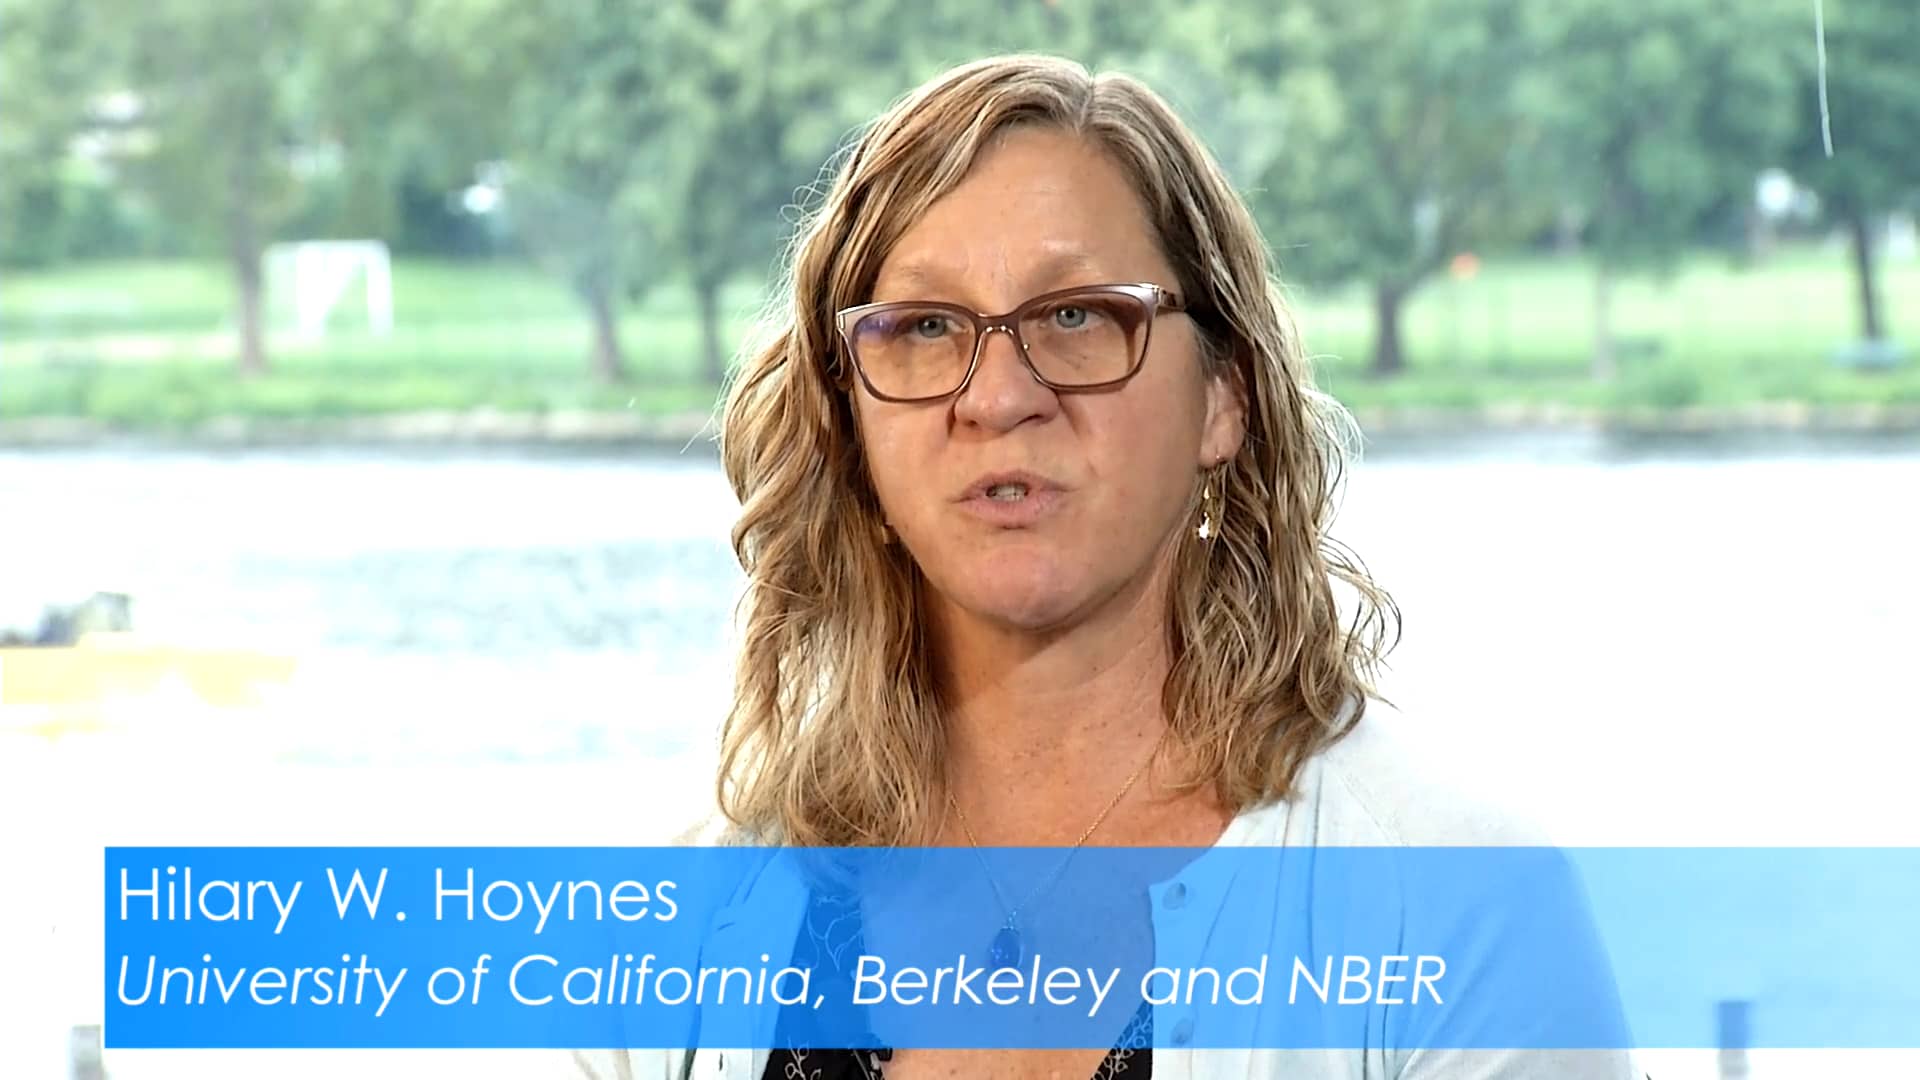 NBER SUMMER INTERVIEW Hoynes on Vimeo